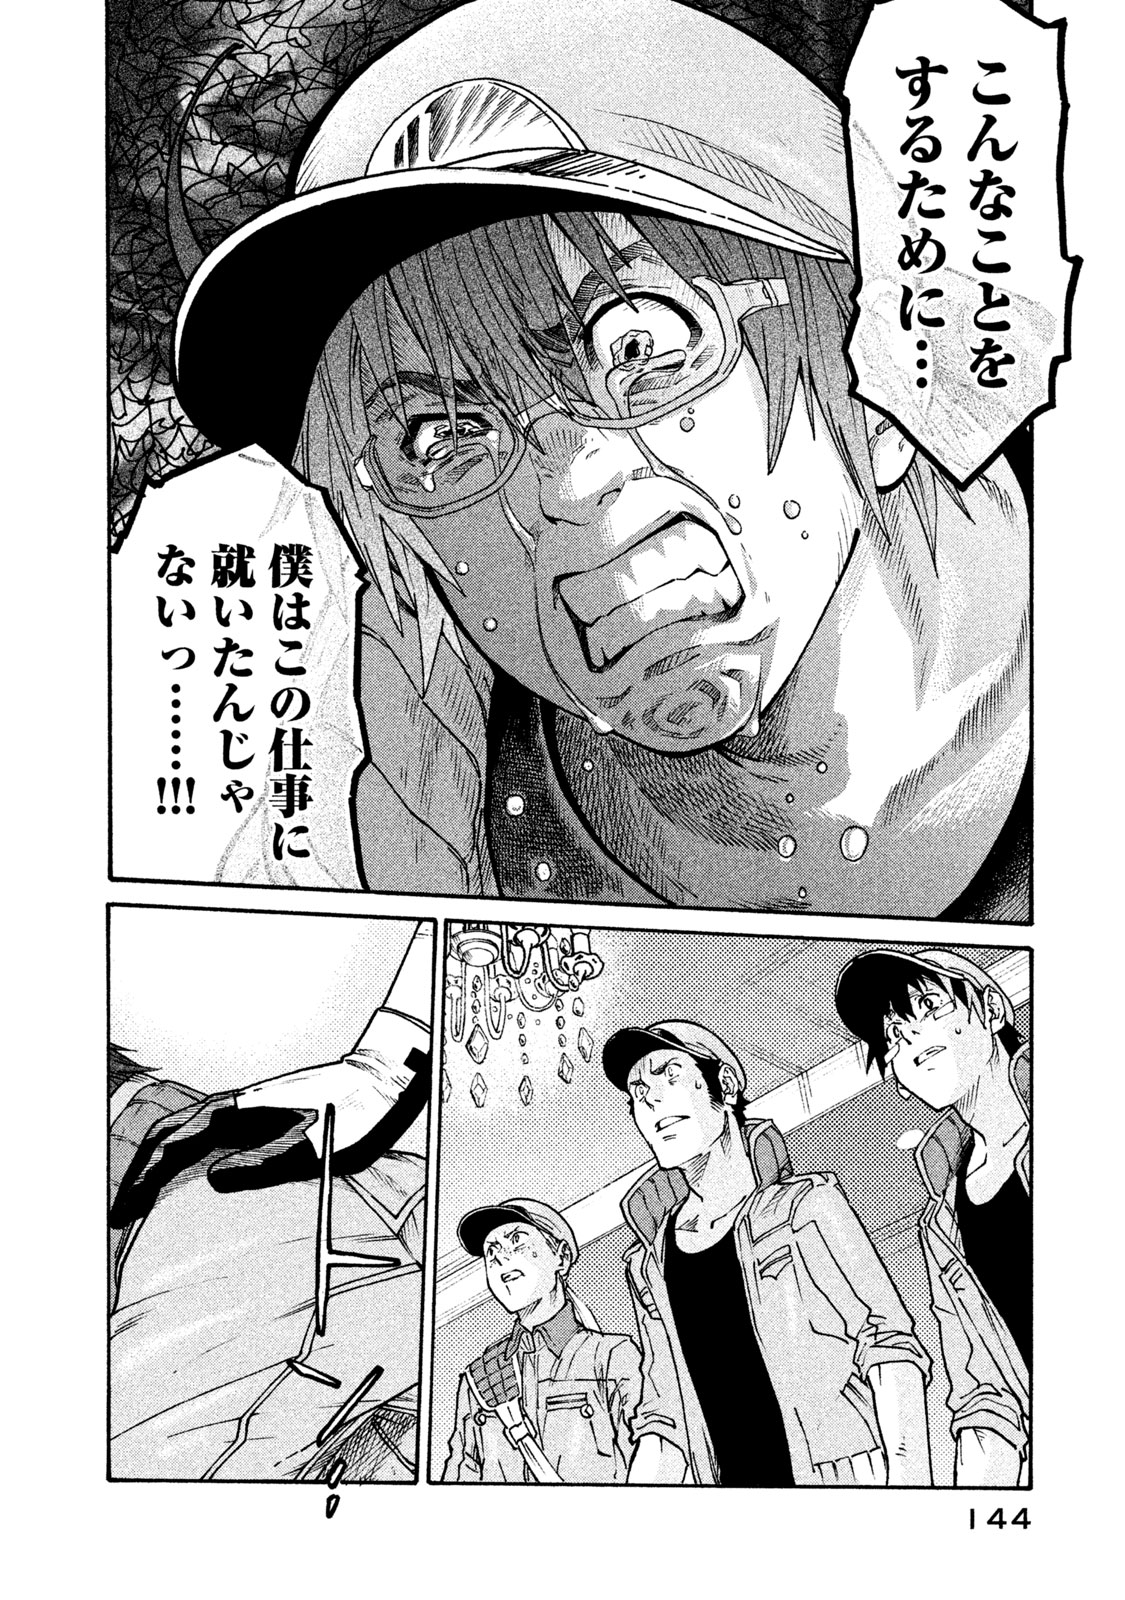 Hataraku Saibou BLACK - Chapter 31 - Page 20